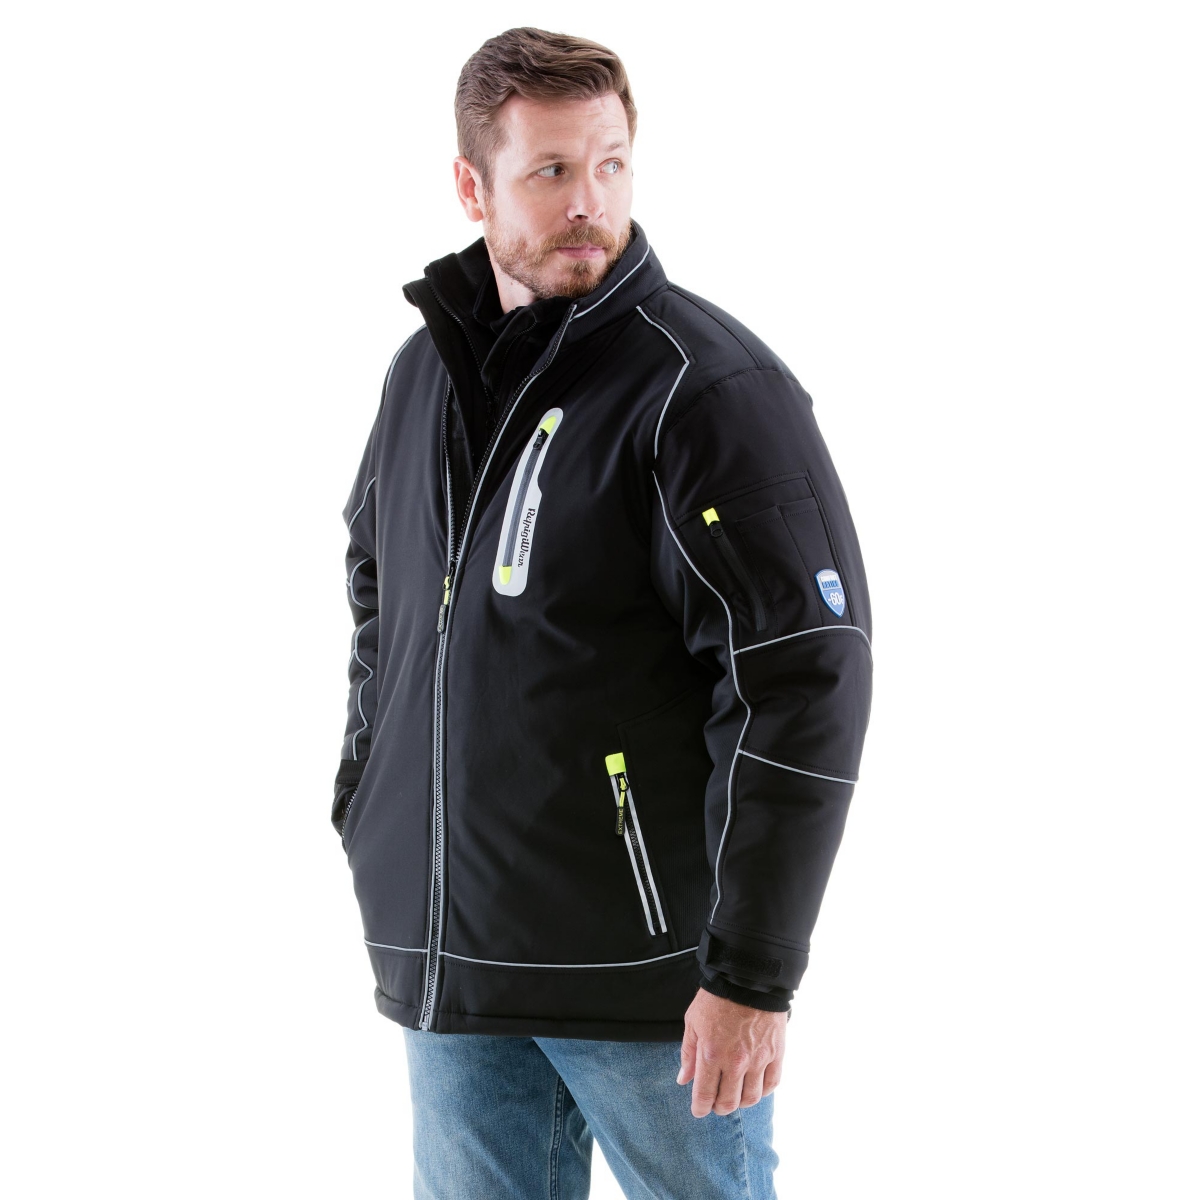 Men's Extreme Weather Softshell Insulated Jacket - Black